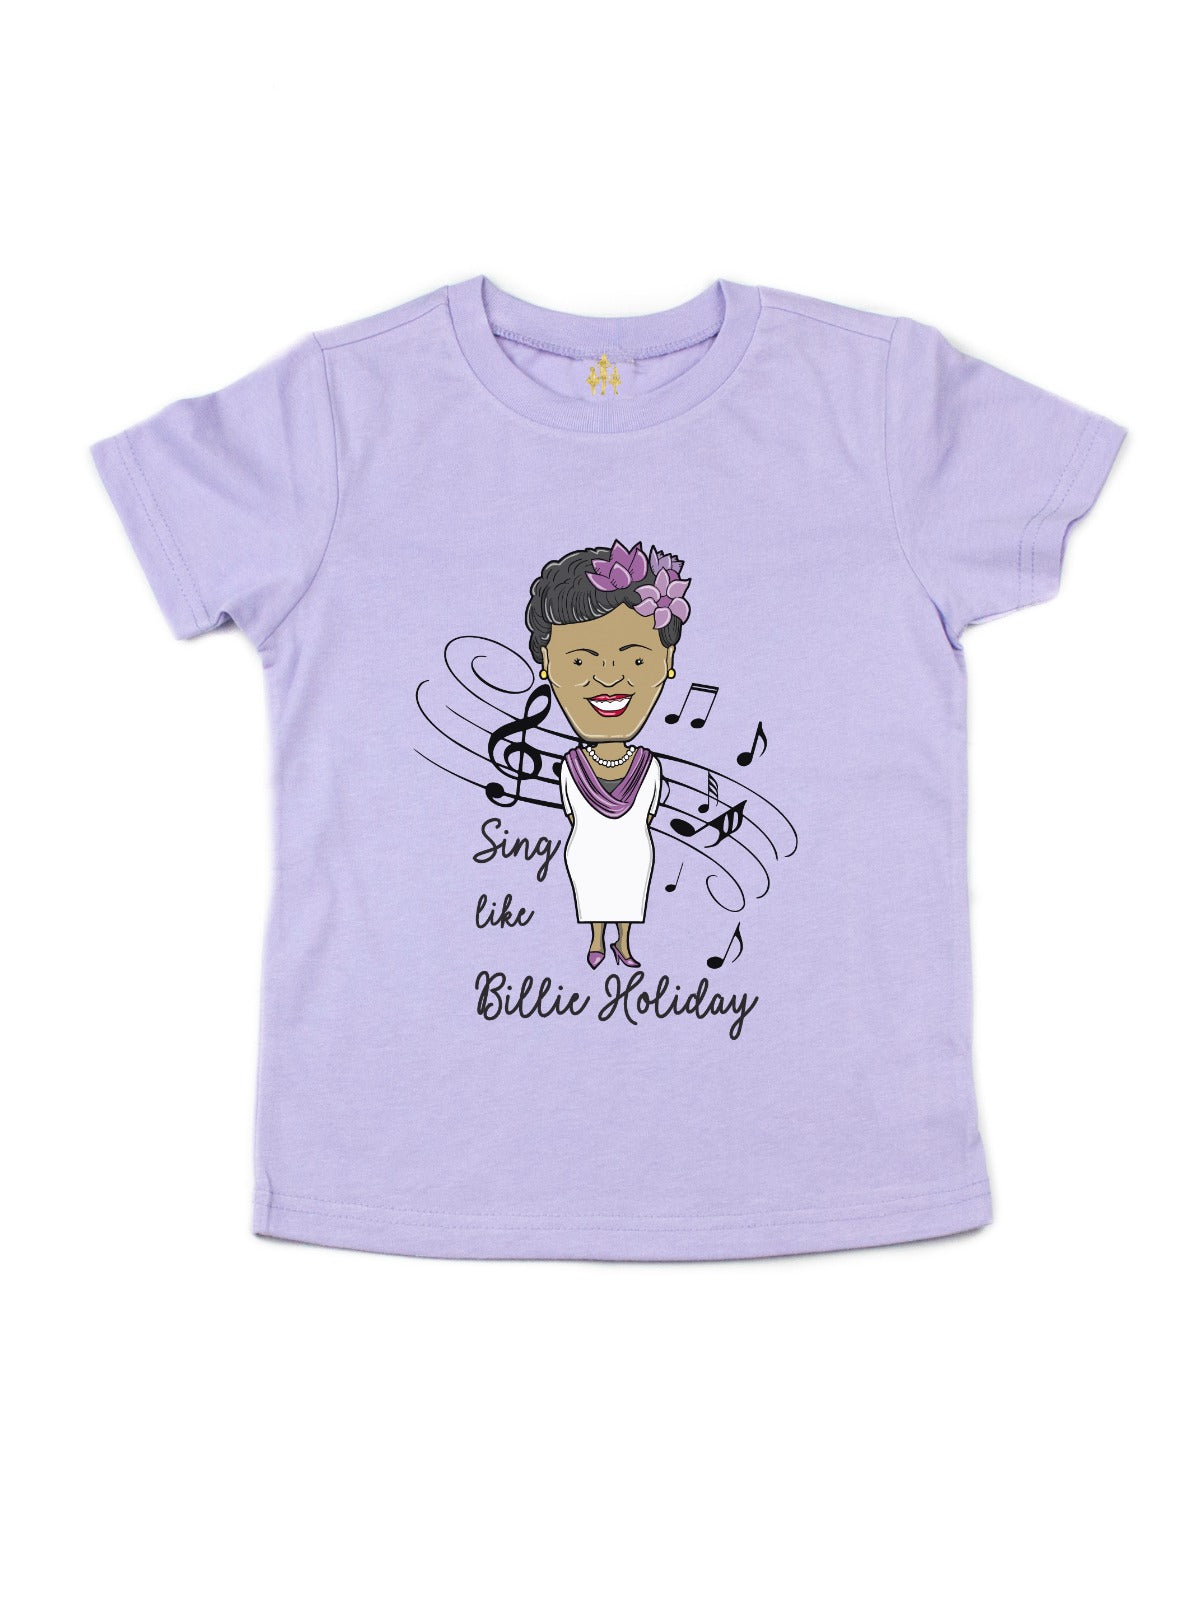 sing like billie holiday girls t-shirt lavender 